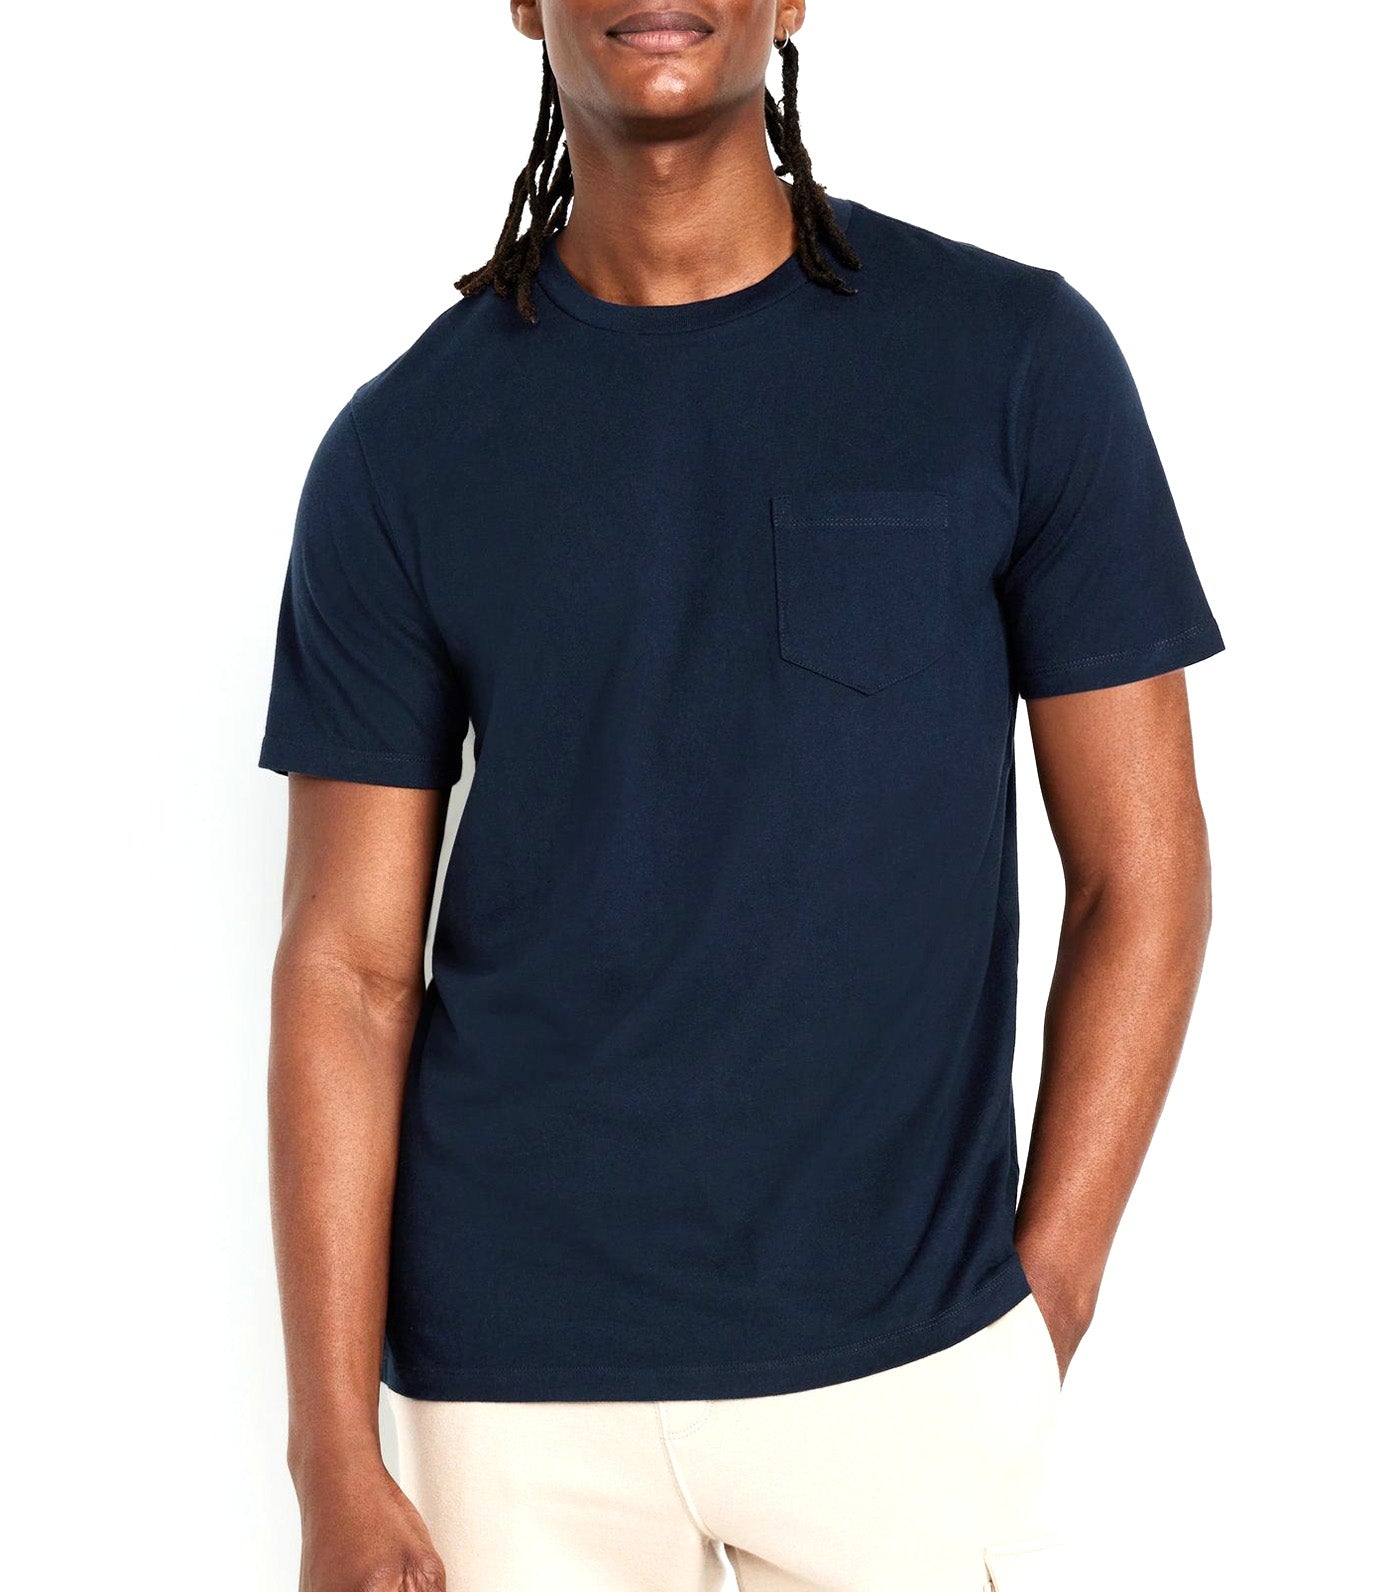 Crew-Neck Pocket T-Shirt for Men In The Navy